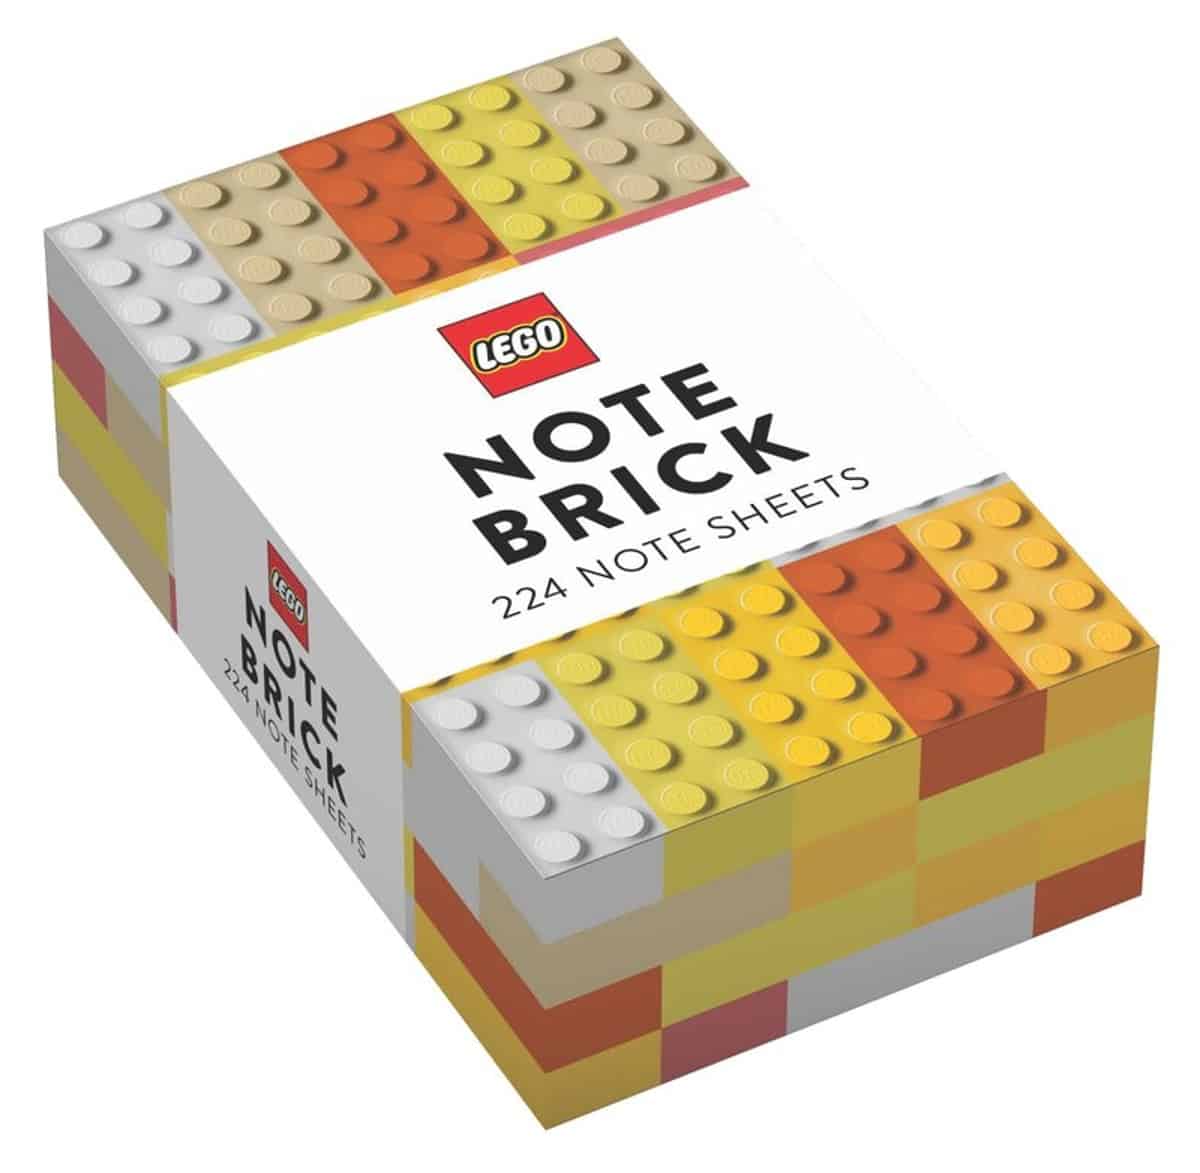 lego 5007224 note brick